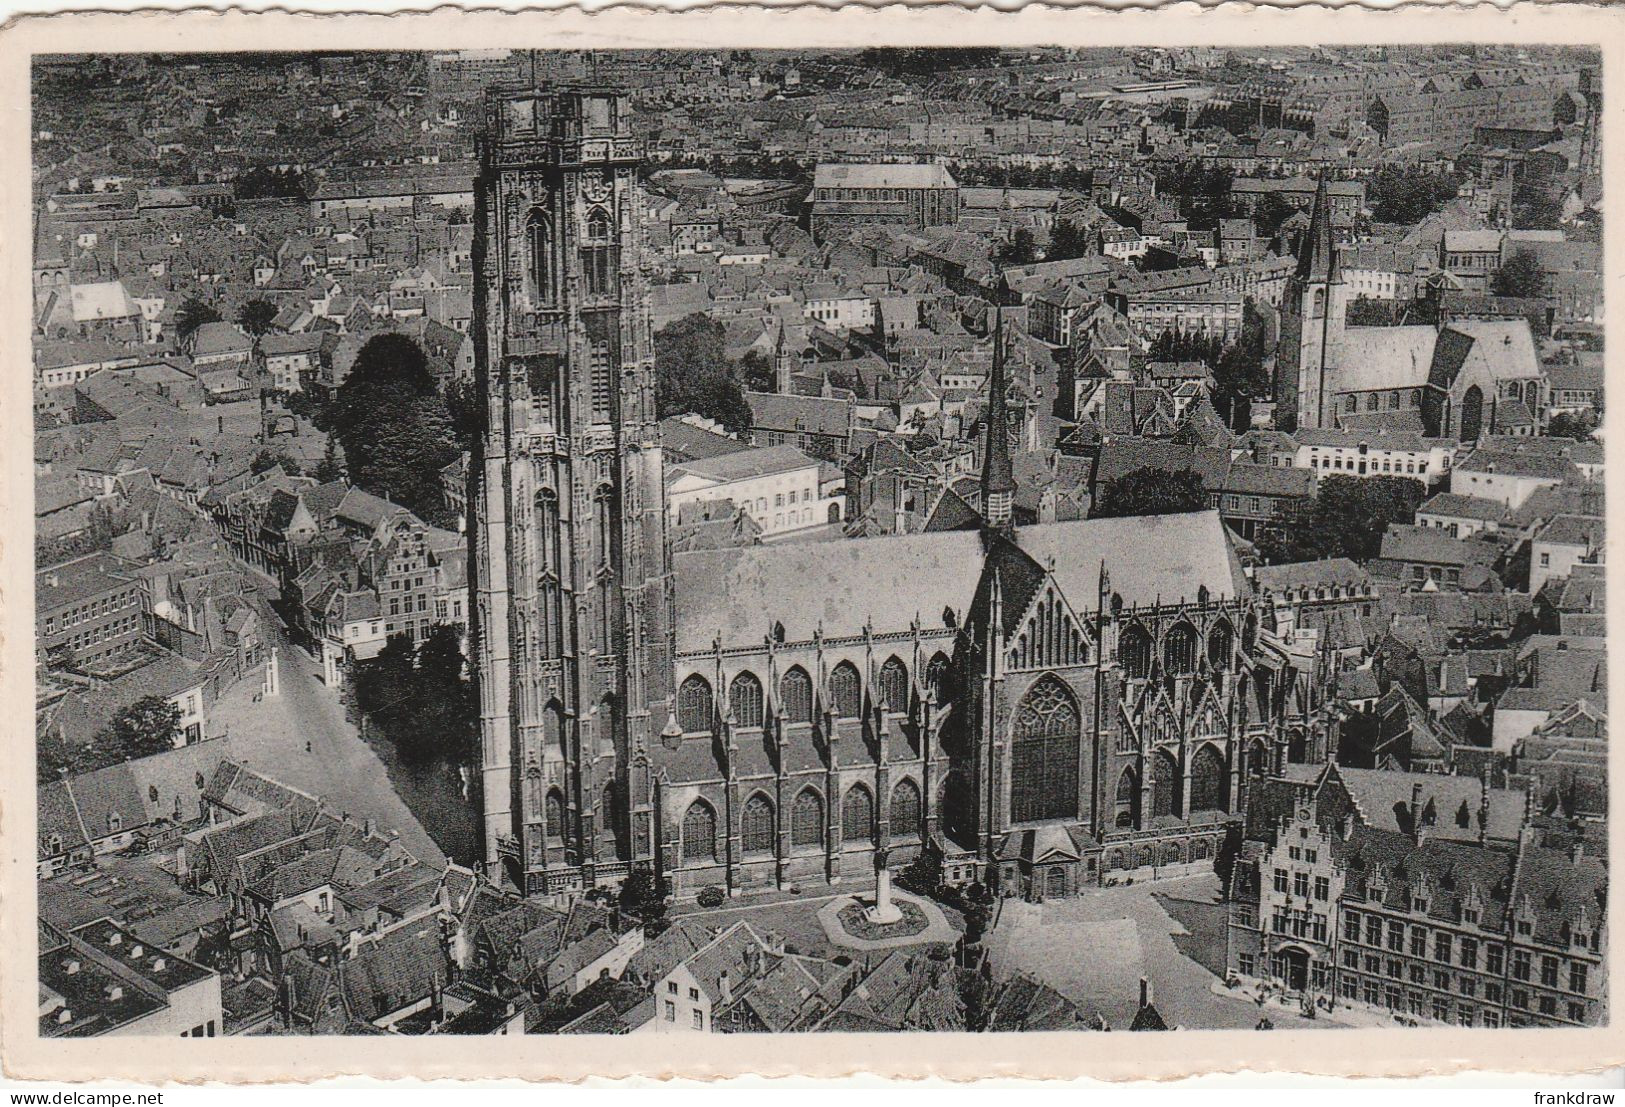 Postcard - Mechelen - Malines - No Card No. - Very Good - Unclassified